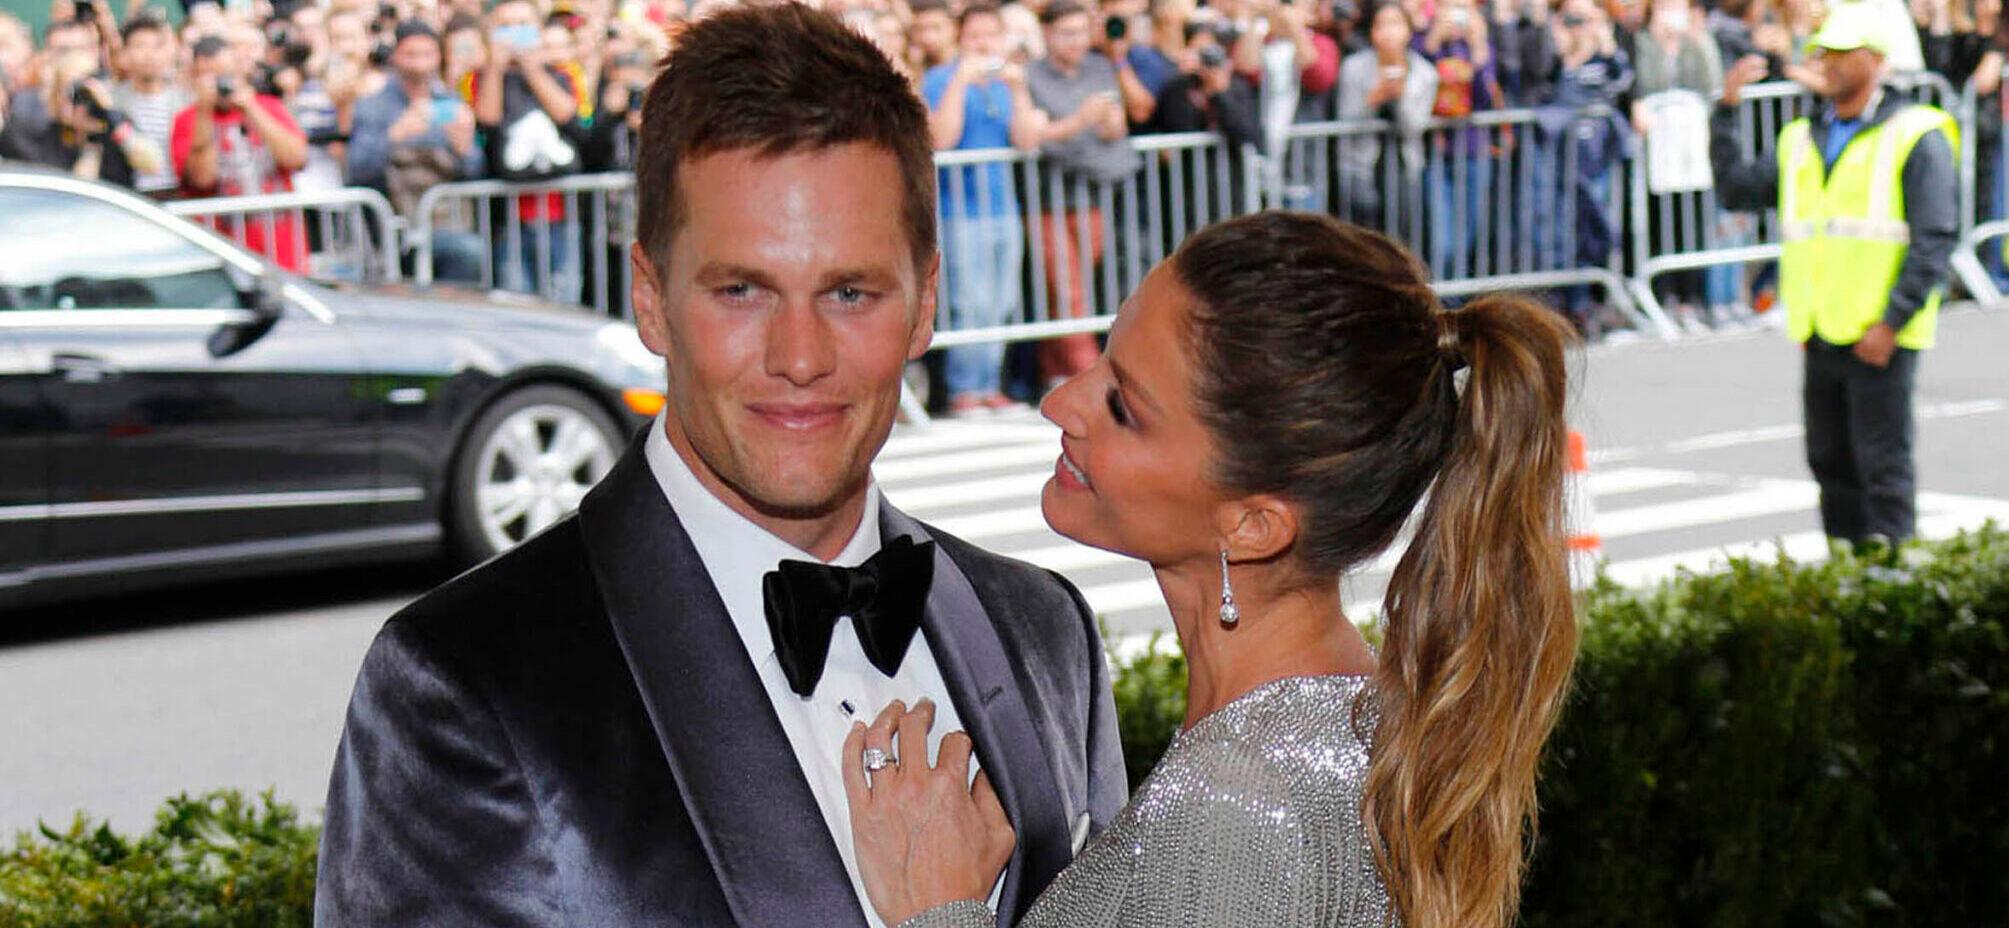 Tom Brady Flies Solo At Robert Kraft’s Wedding Amid Gisele Bündchen Marriage Woes